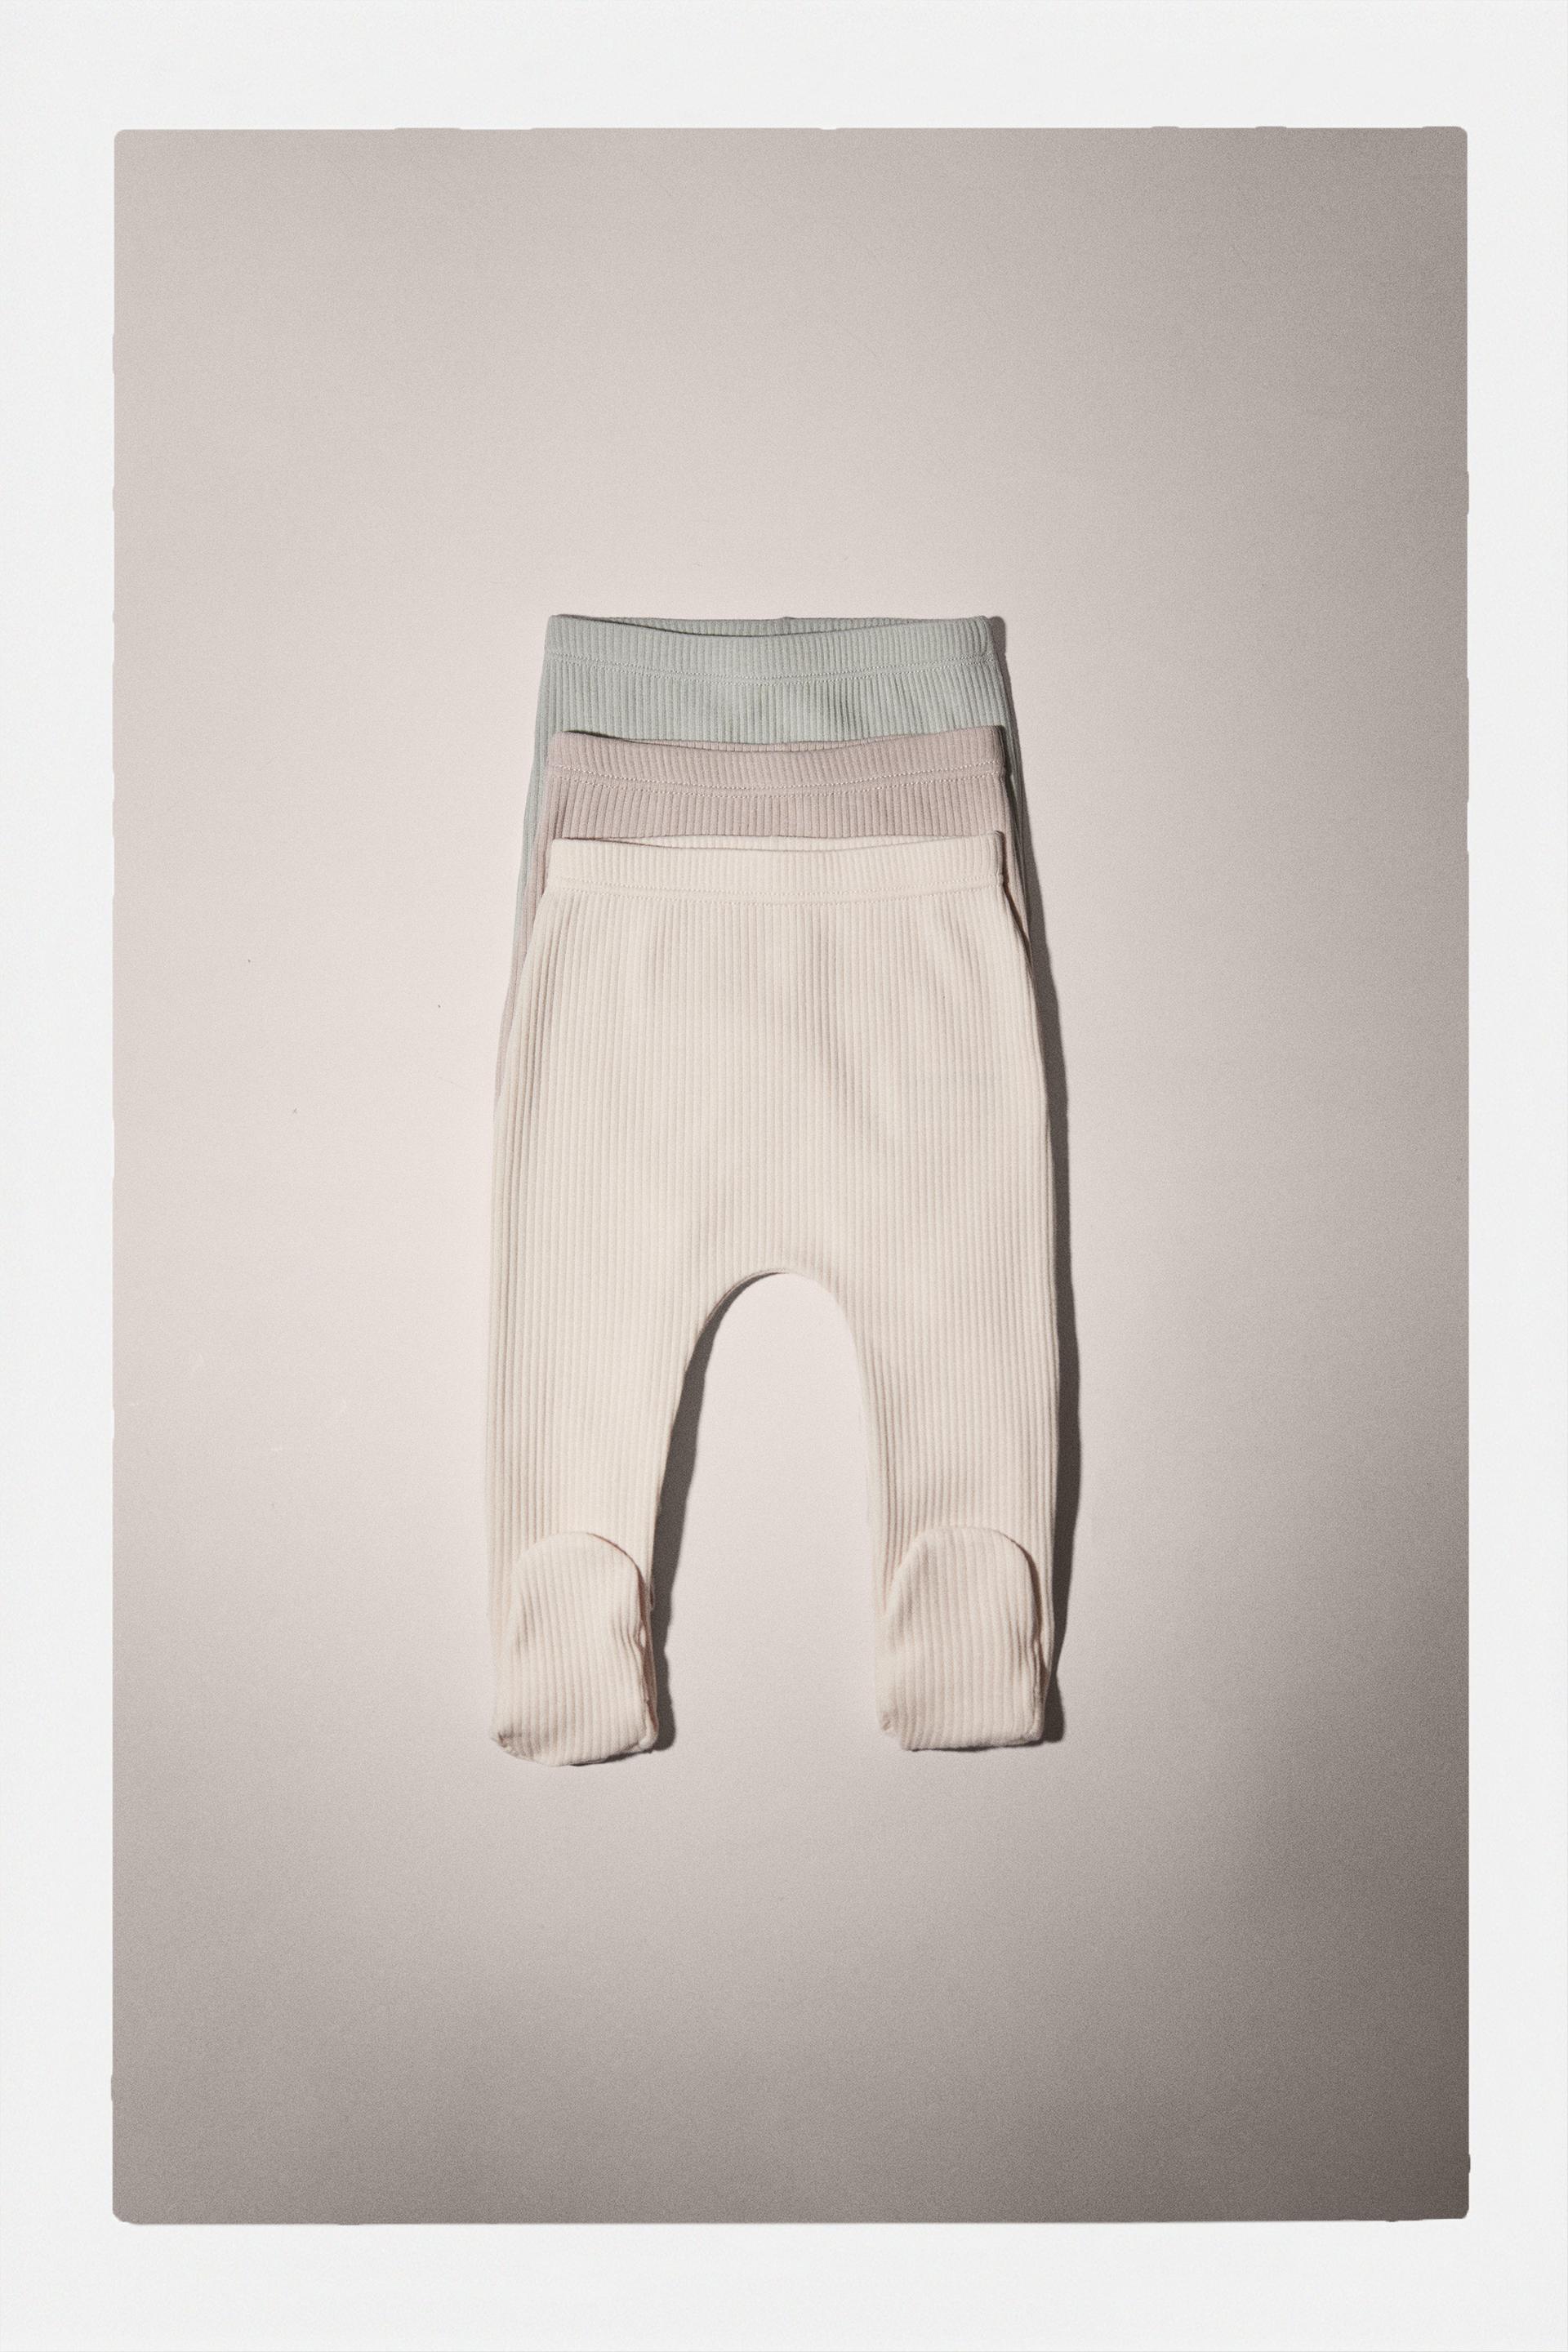 Zara girls toddler 3-4 heather cream tan ribbed leggings nwt full